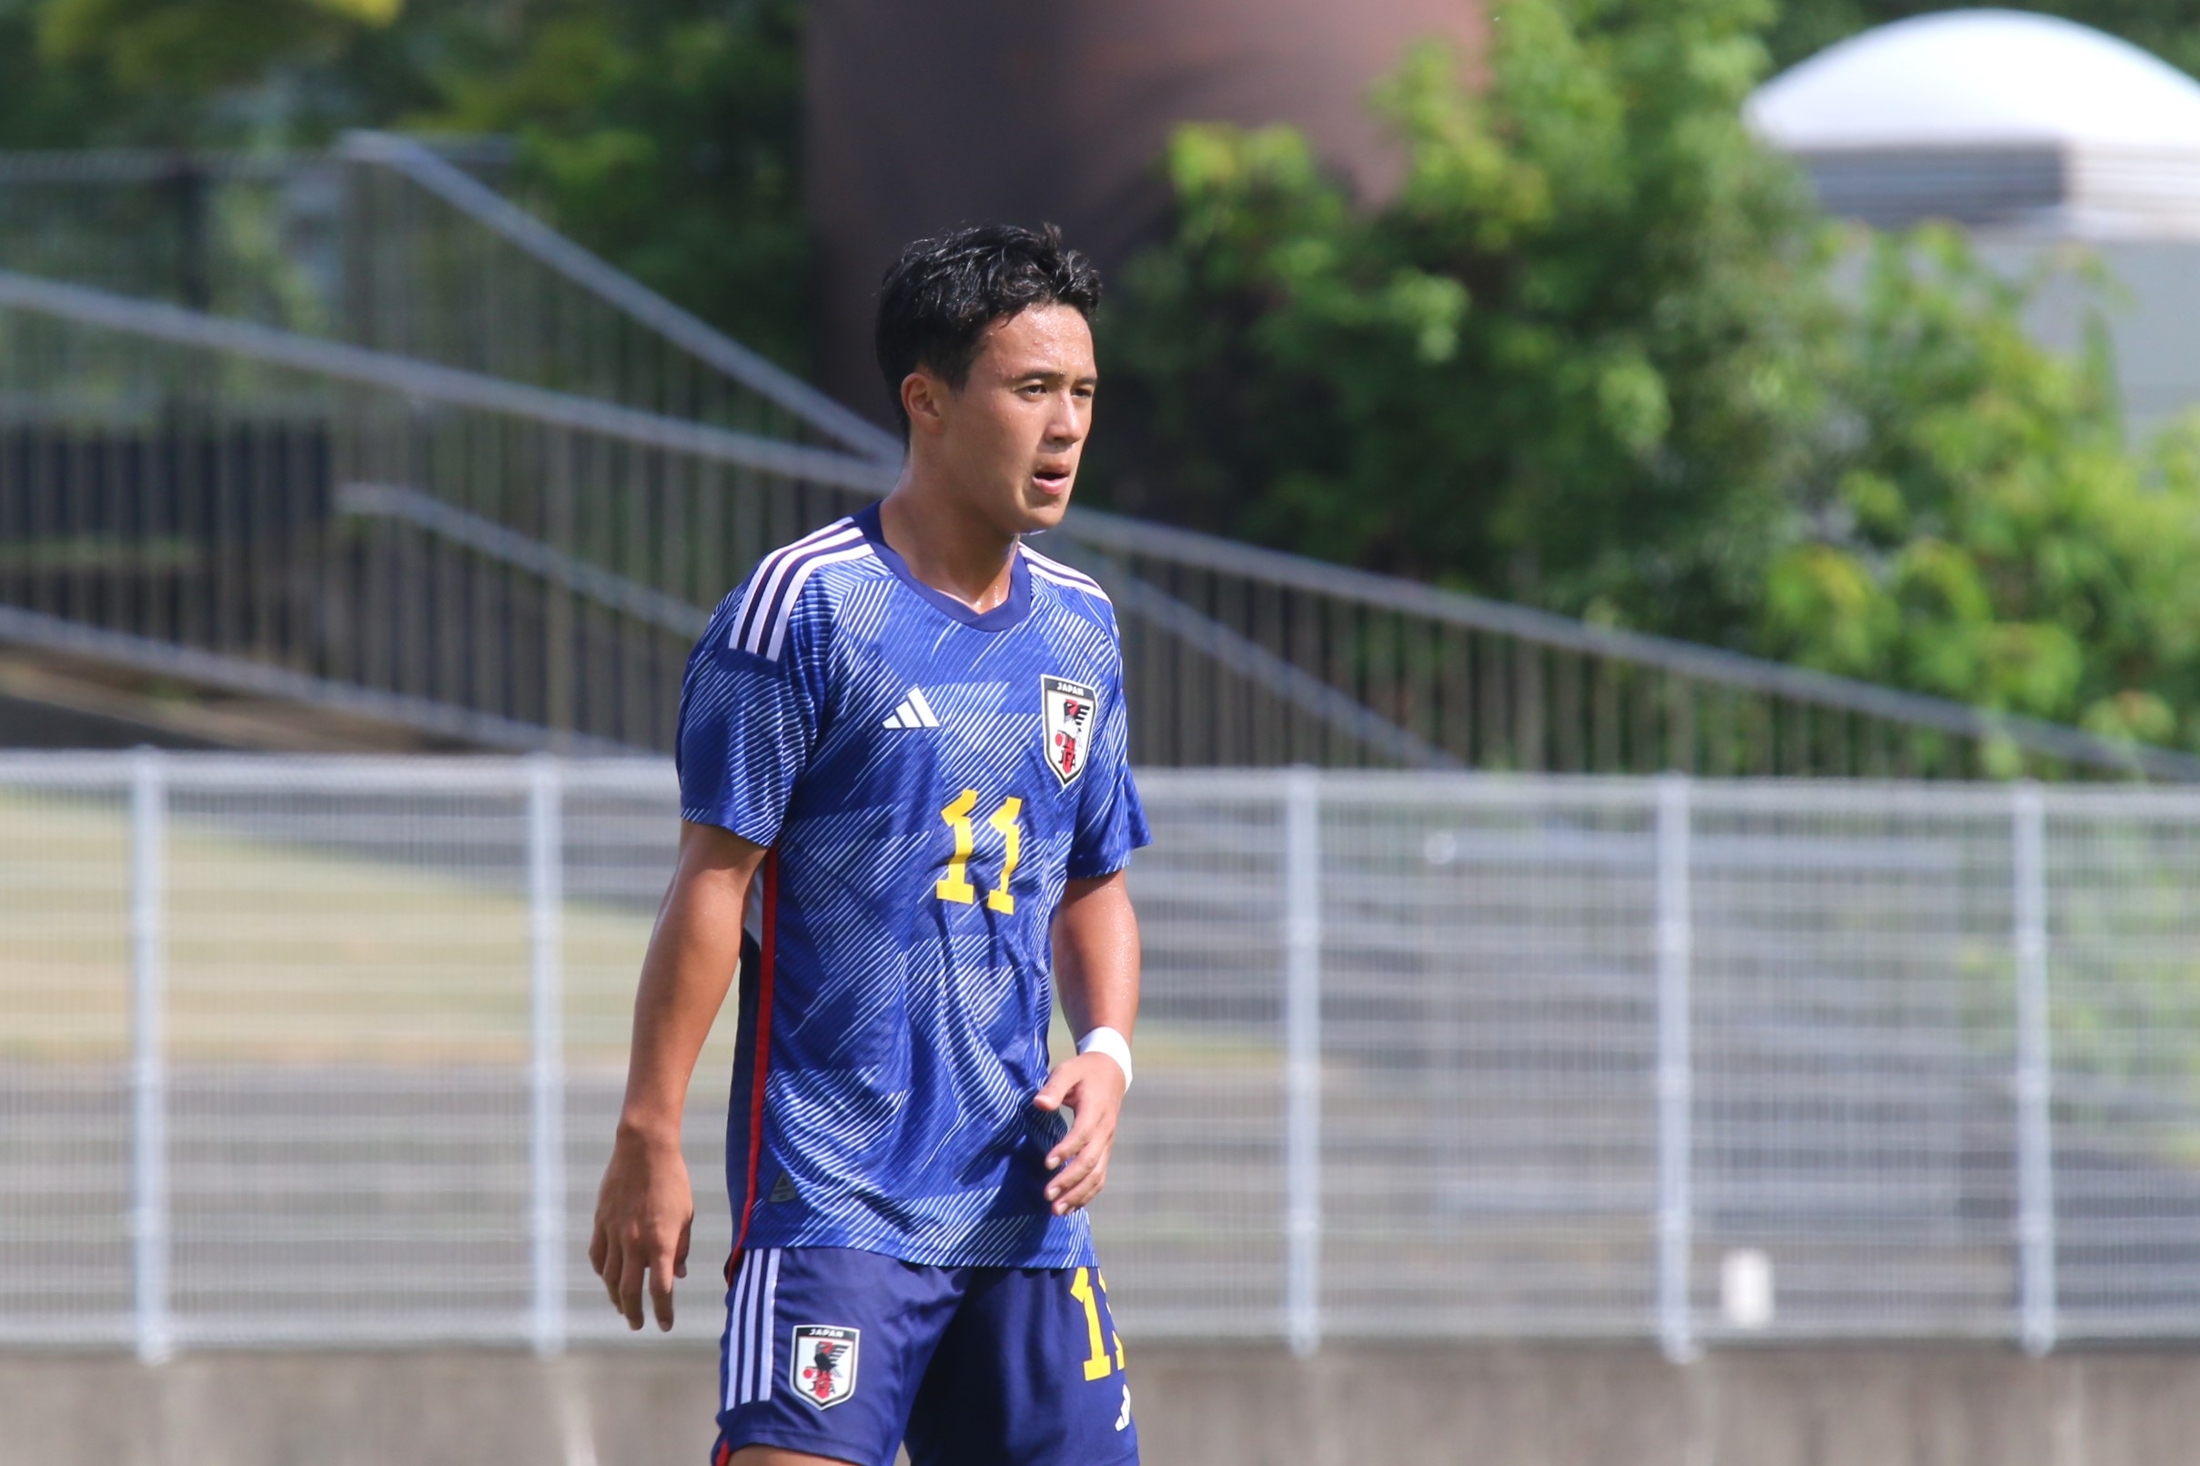 NEXT GENERATION MATCH 」に臨む日本高校サッカー選抜メンバーが発表 